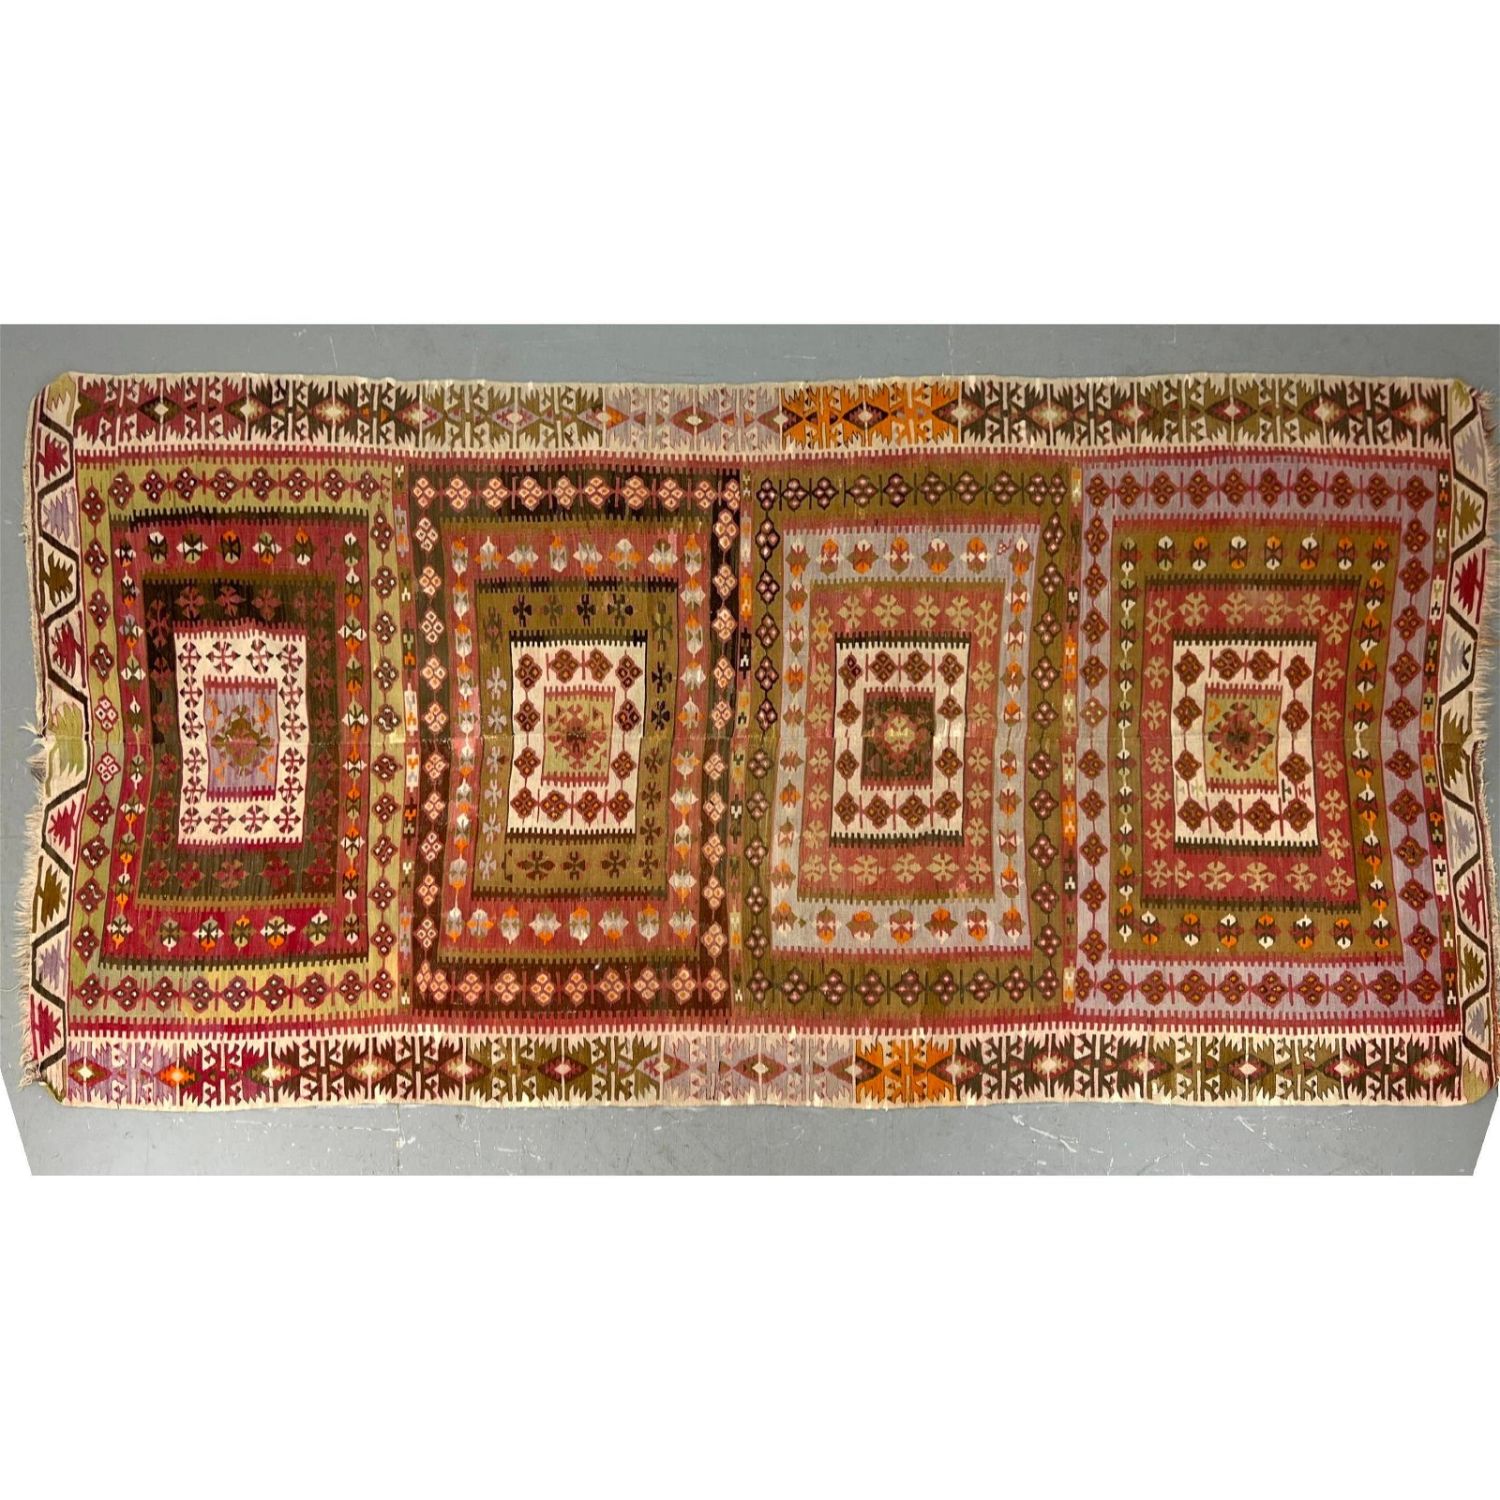 5' X 12' Flat weave Carpet Rug.